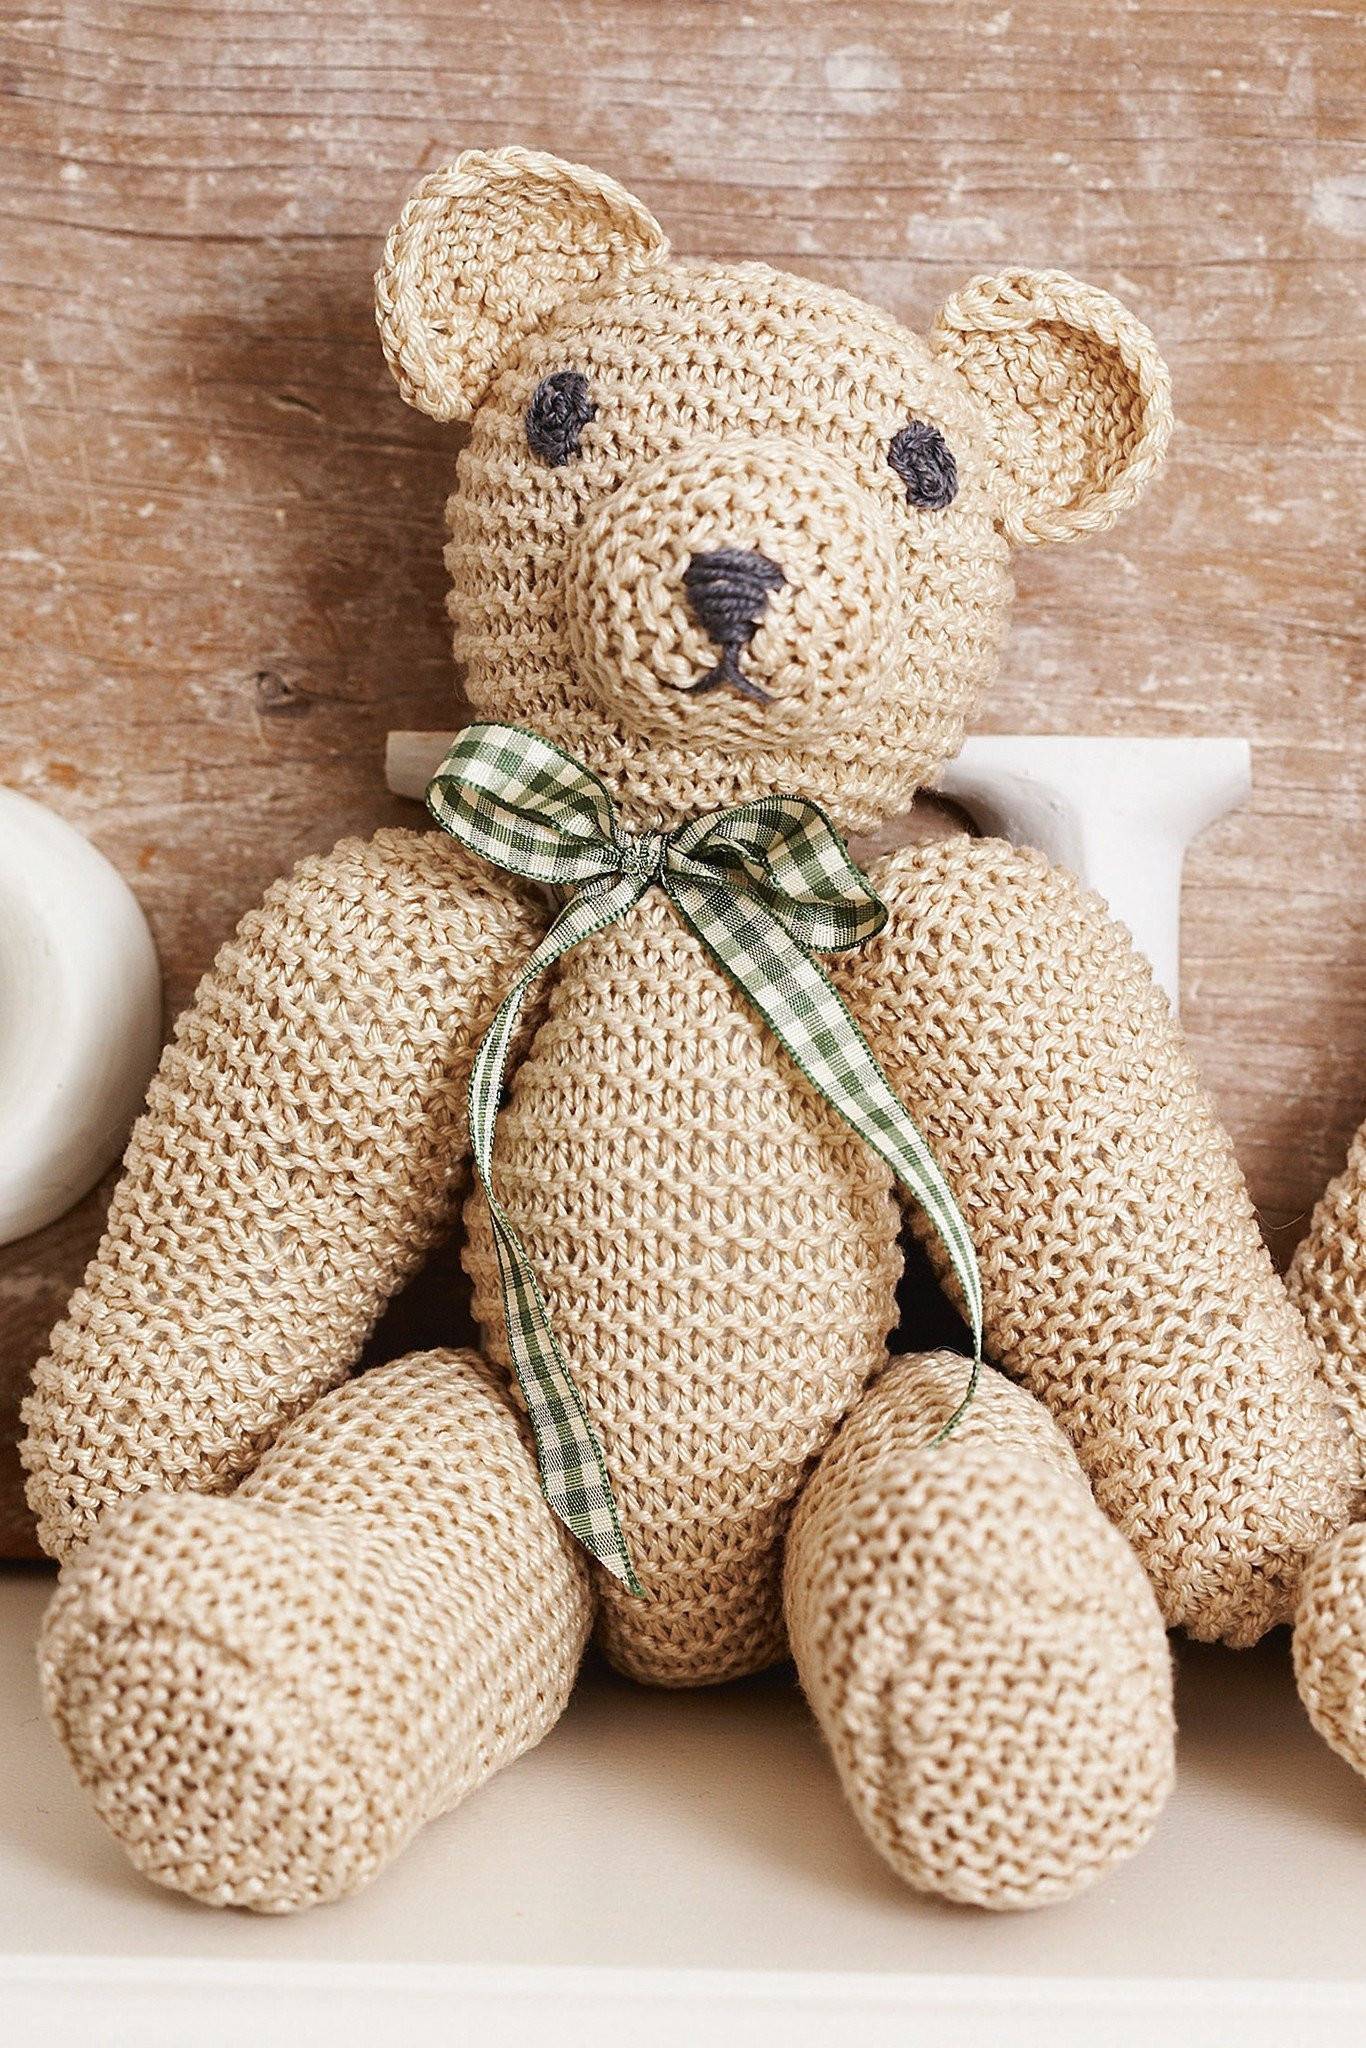 the original teddy knitting pattern